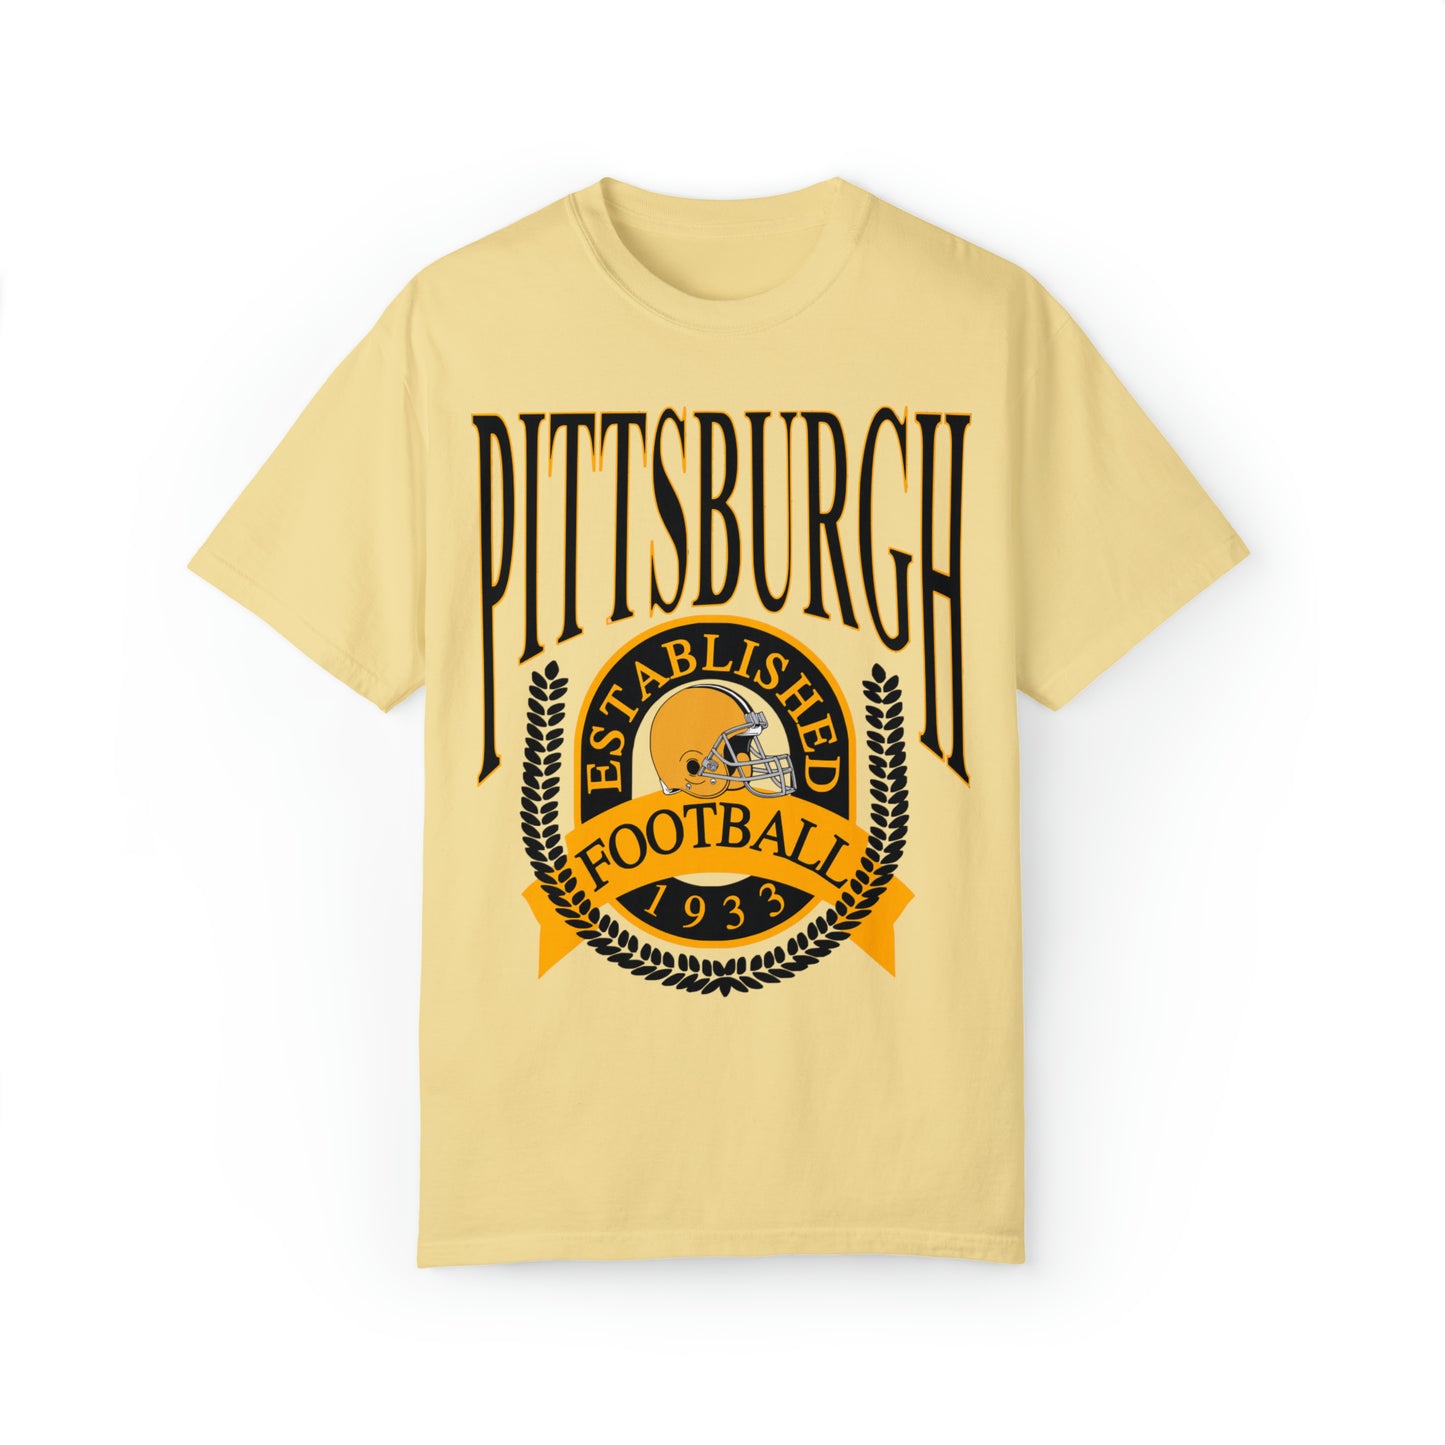 Throwback Comfort Colors Pittsburgh Steelers Short Sleeve T-Shirt - Vintage Steel City Football Gear, Apparel, Retro Tee - Design 1